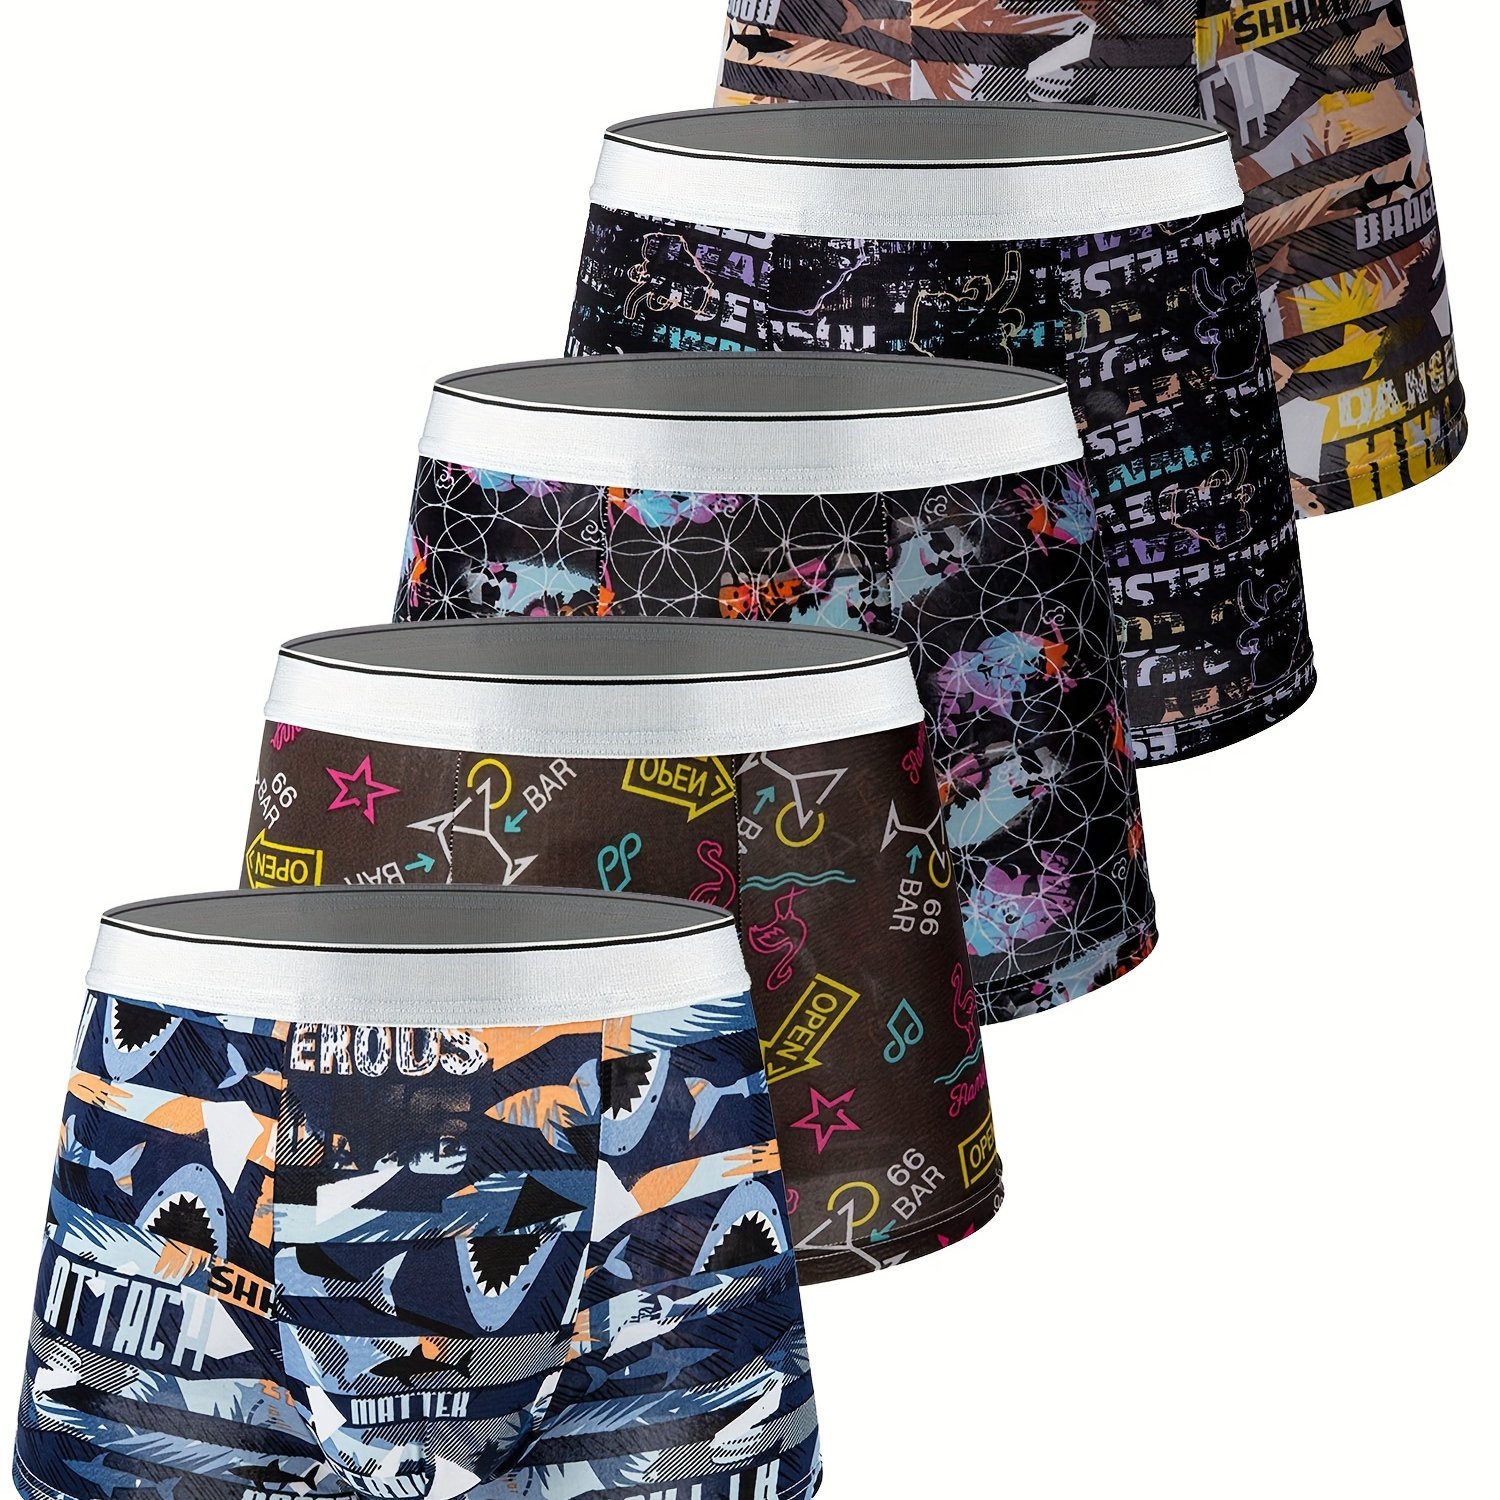 4/5/8/10pcs Men's Ice Silk Cool Comfy Elastic Summer Boxers Briefs  Underwear, Slim Fit Quick Drying Underpants, Multicolor Set